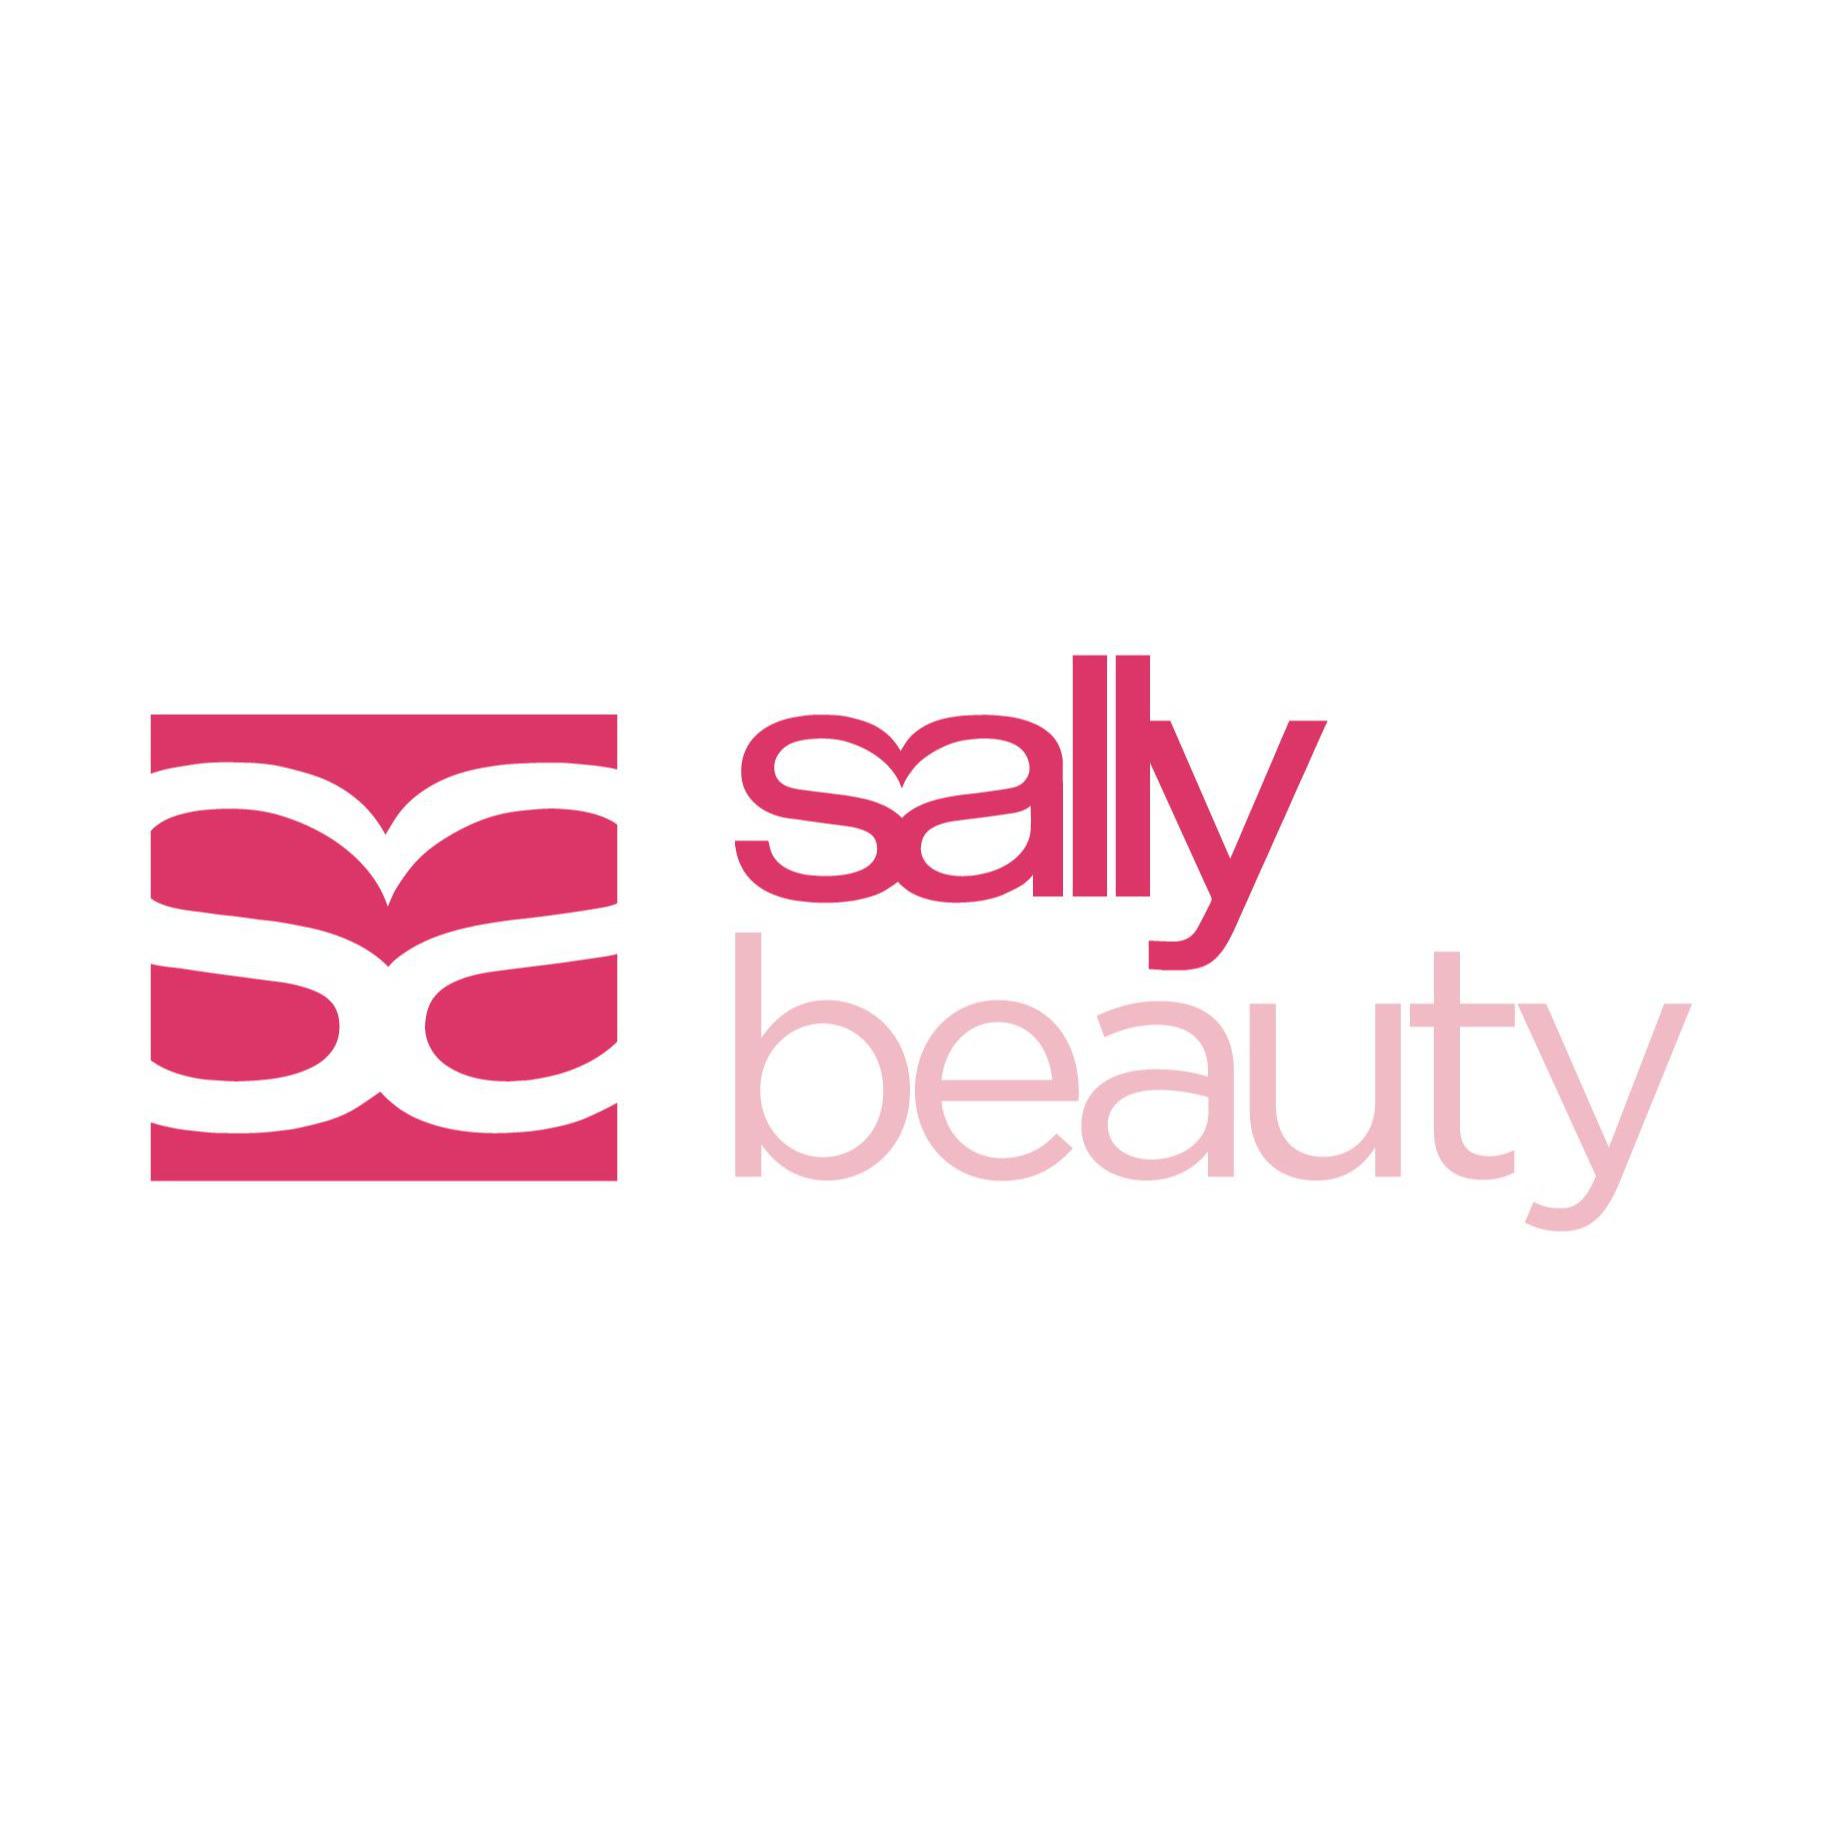 Sally Beauty - Blackpool, Lancashire FY4 4RZ - 01253 696979 | ShowMeLocal.com